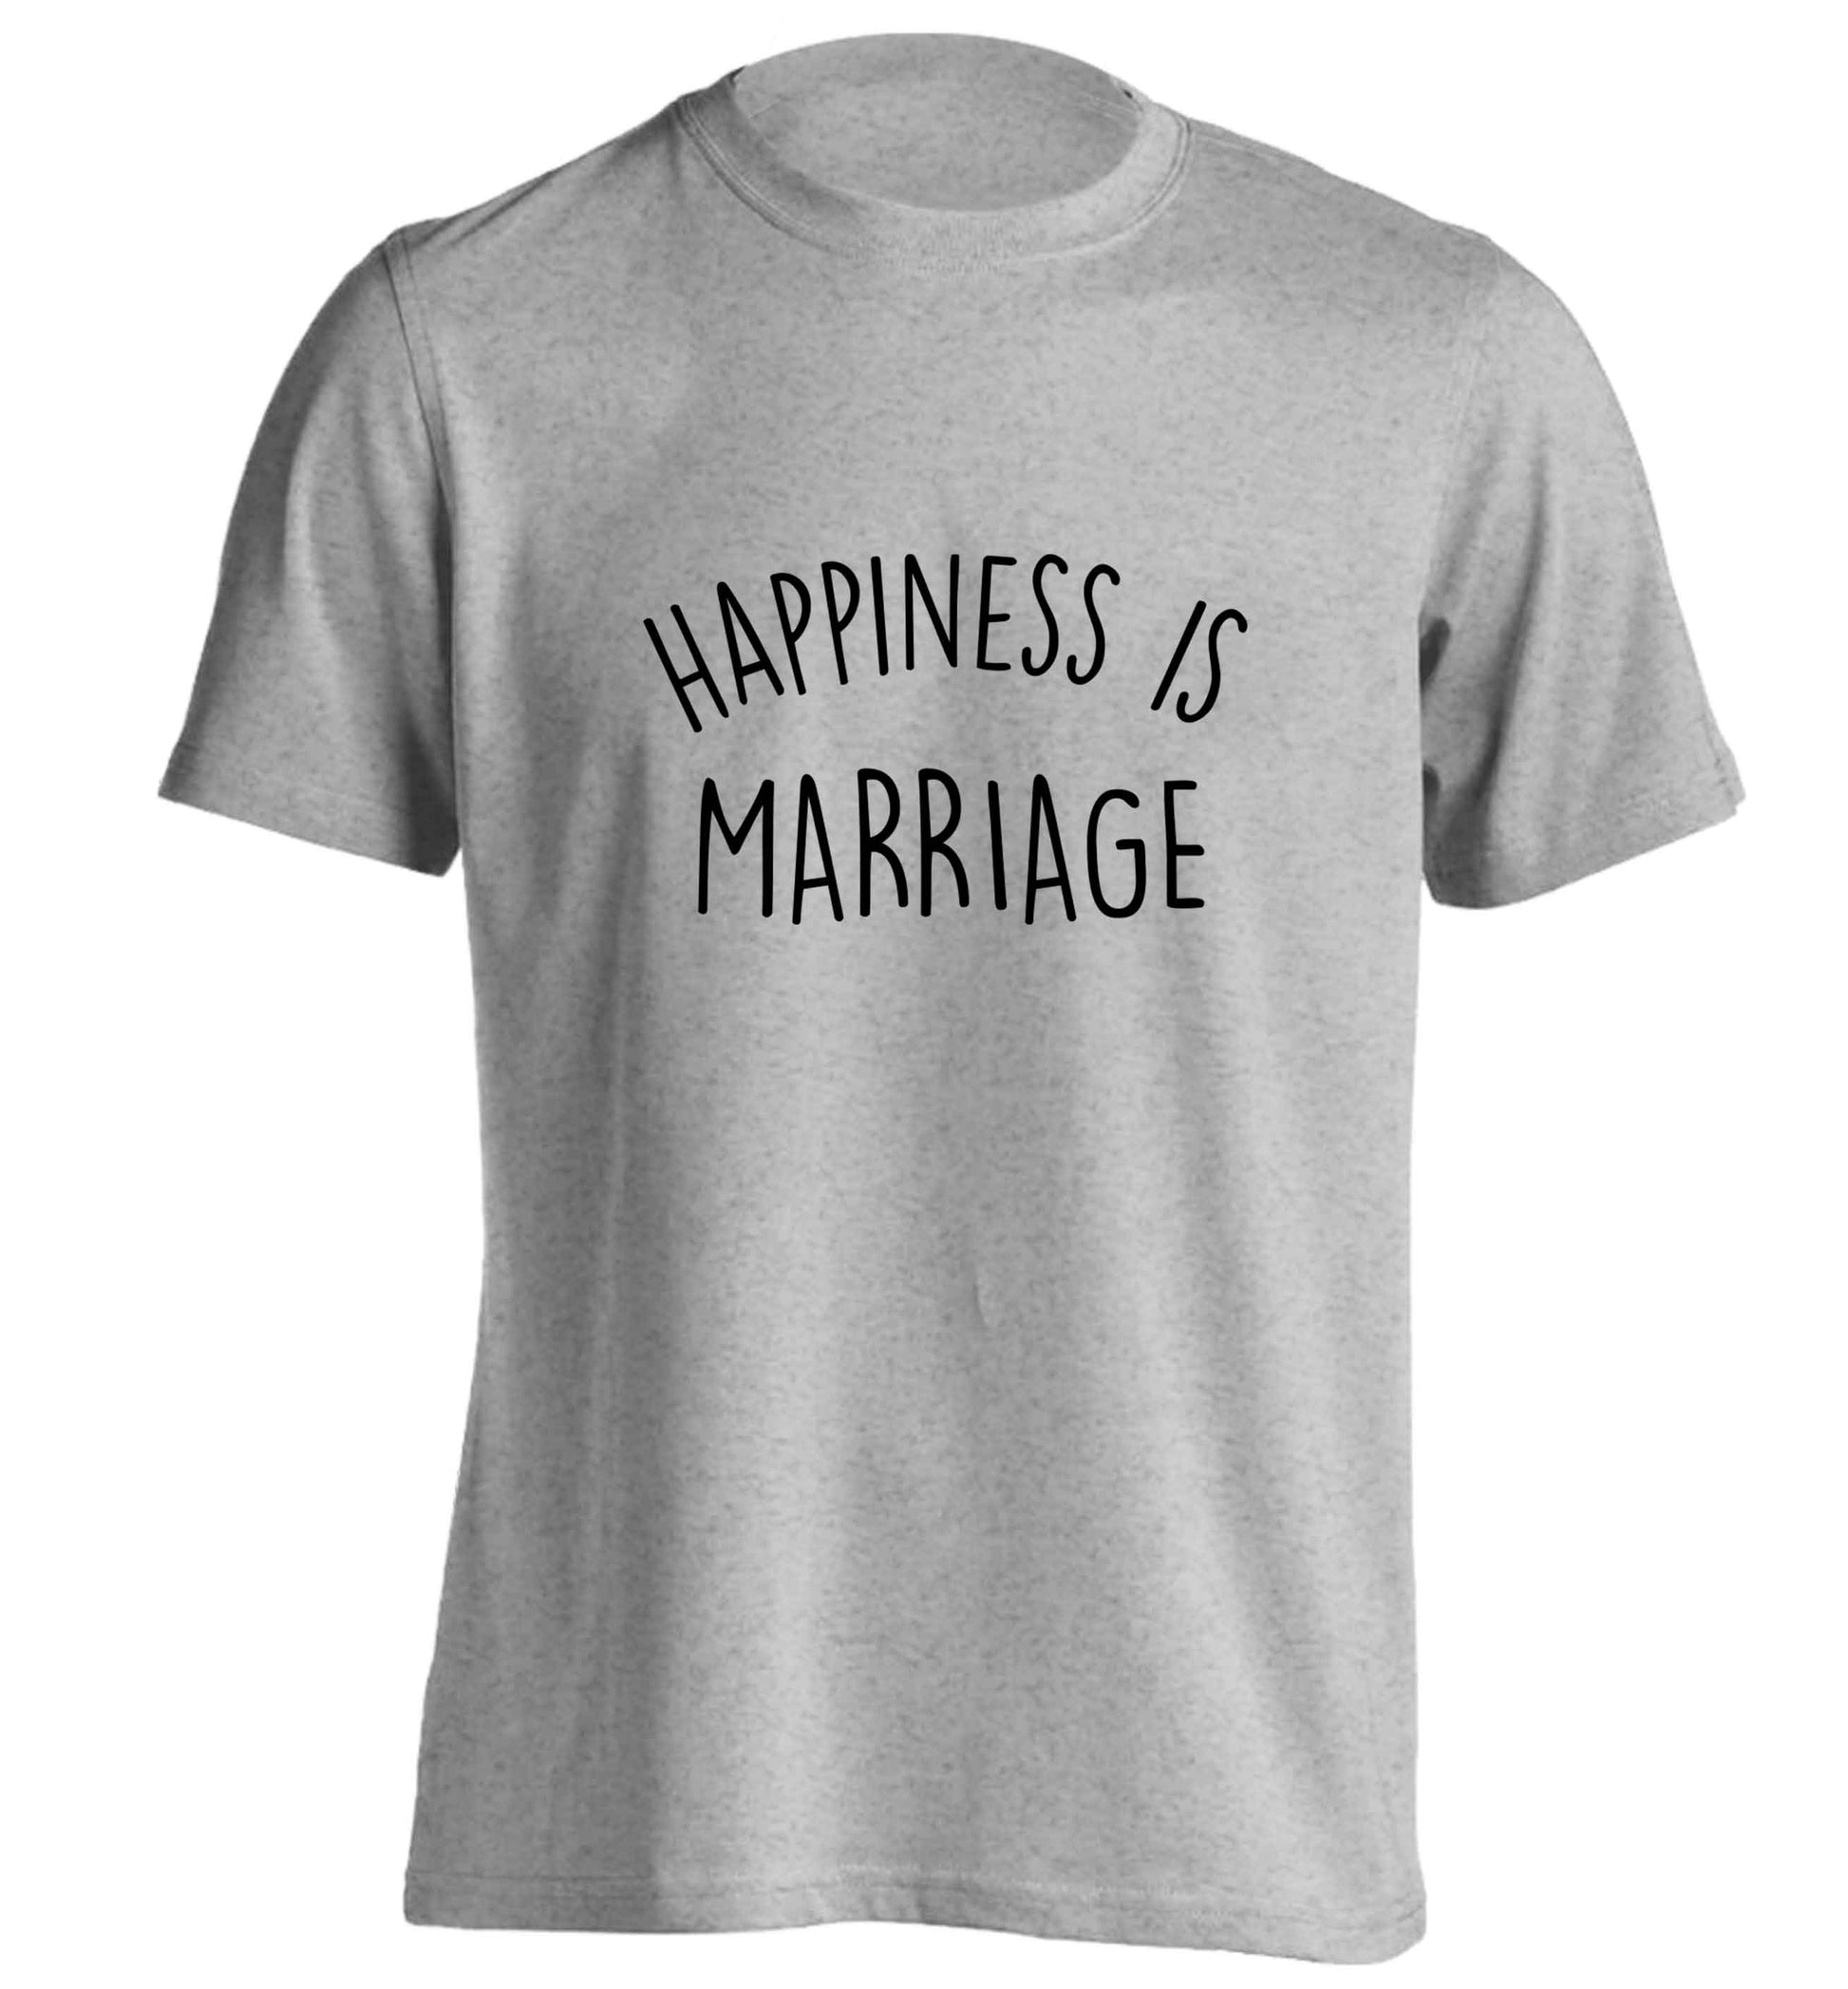 Happiness is wedding planning adults unisex grey Tshirt 2XL